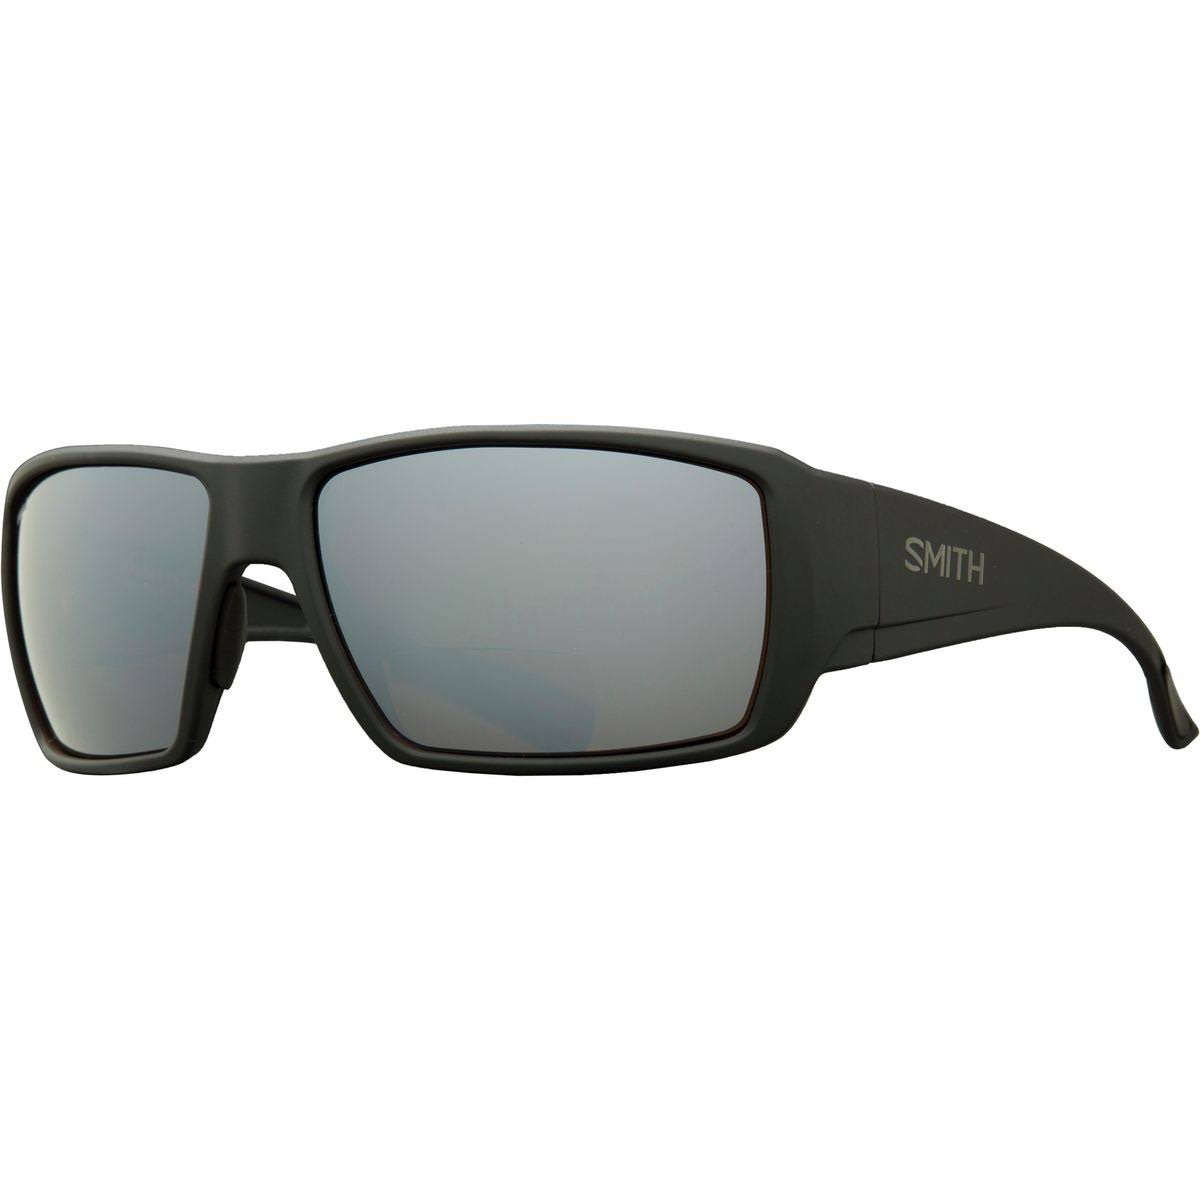 Smith Guides Choice Bifocal Polarized Sunglasses - Men's Matte Black/Copper Mirror 2.50, One Size